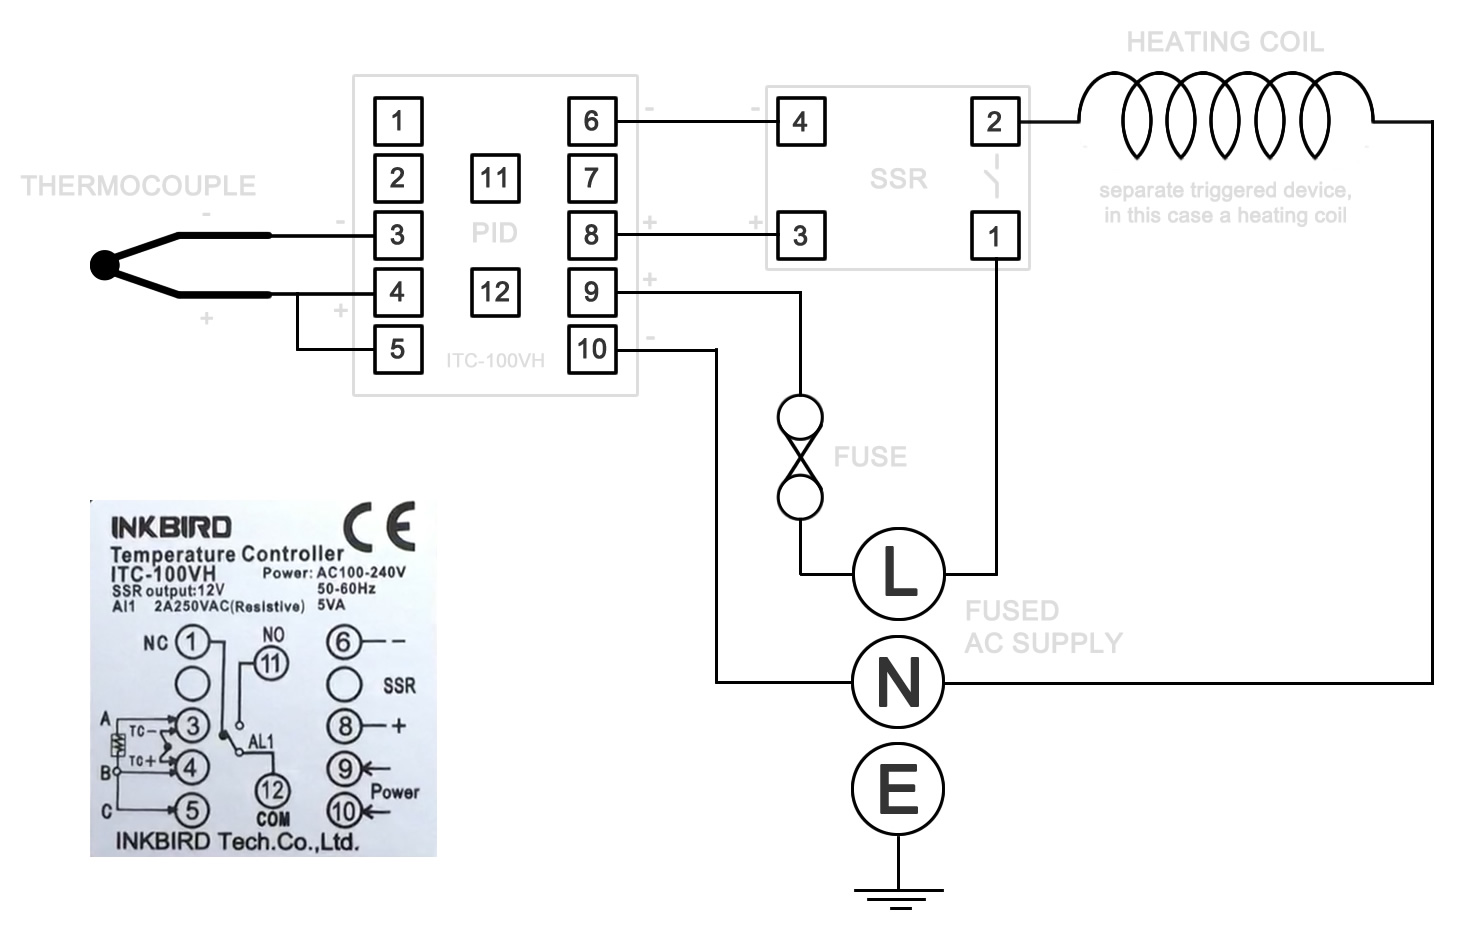 Inkbird ITC-100VH PID wiring diagram